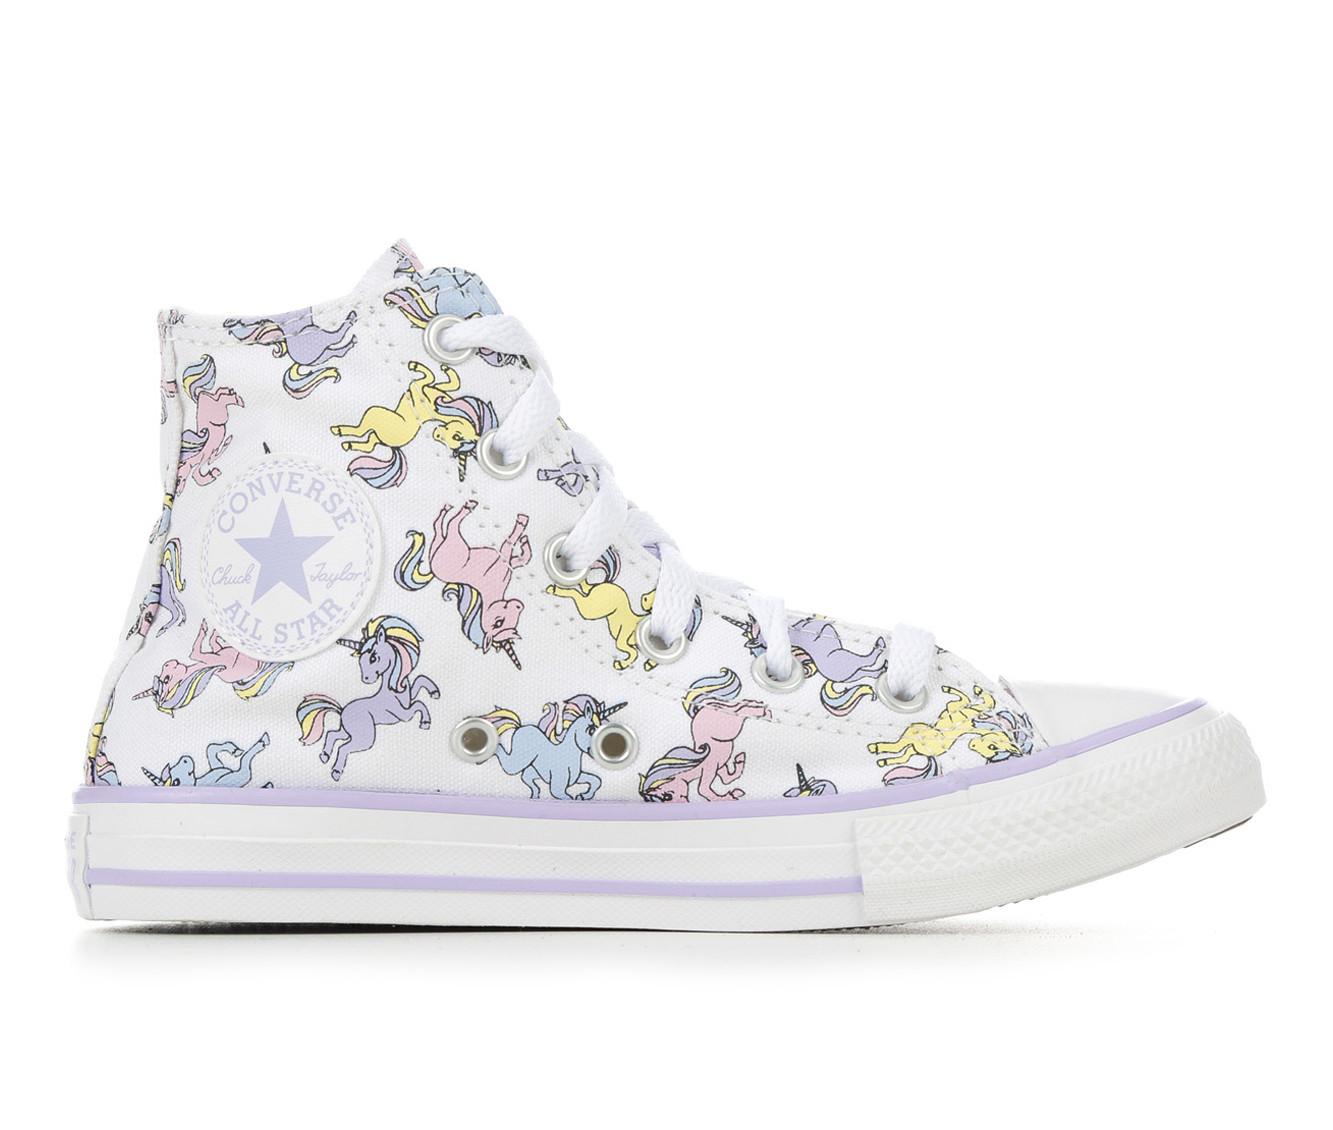 Girls' Converse Little Kid Chuck Taylor All Star Unicorn Mid Sneakers